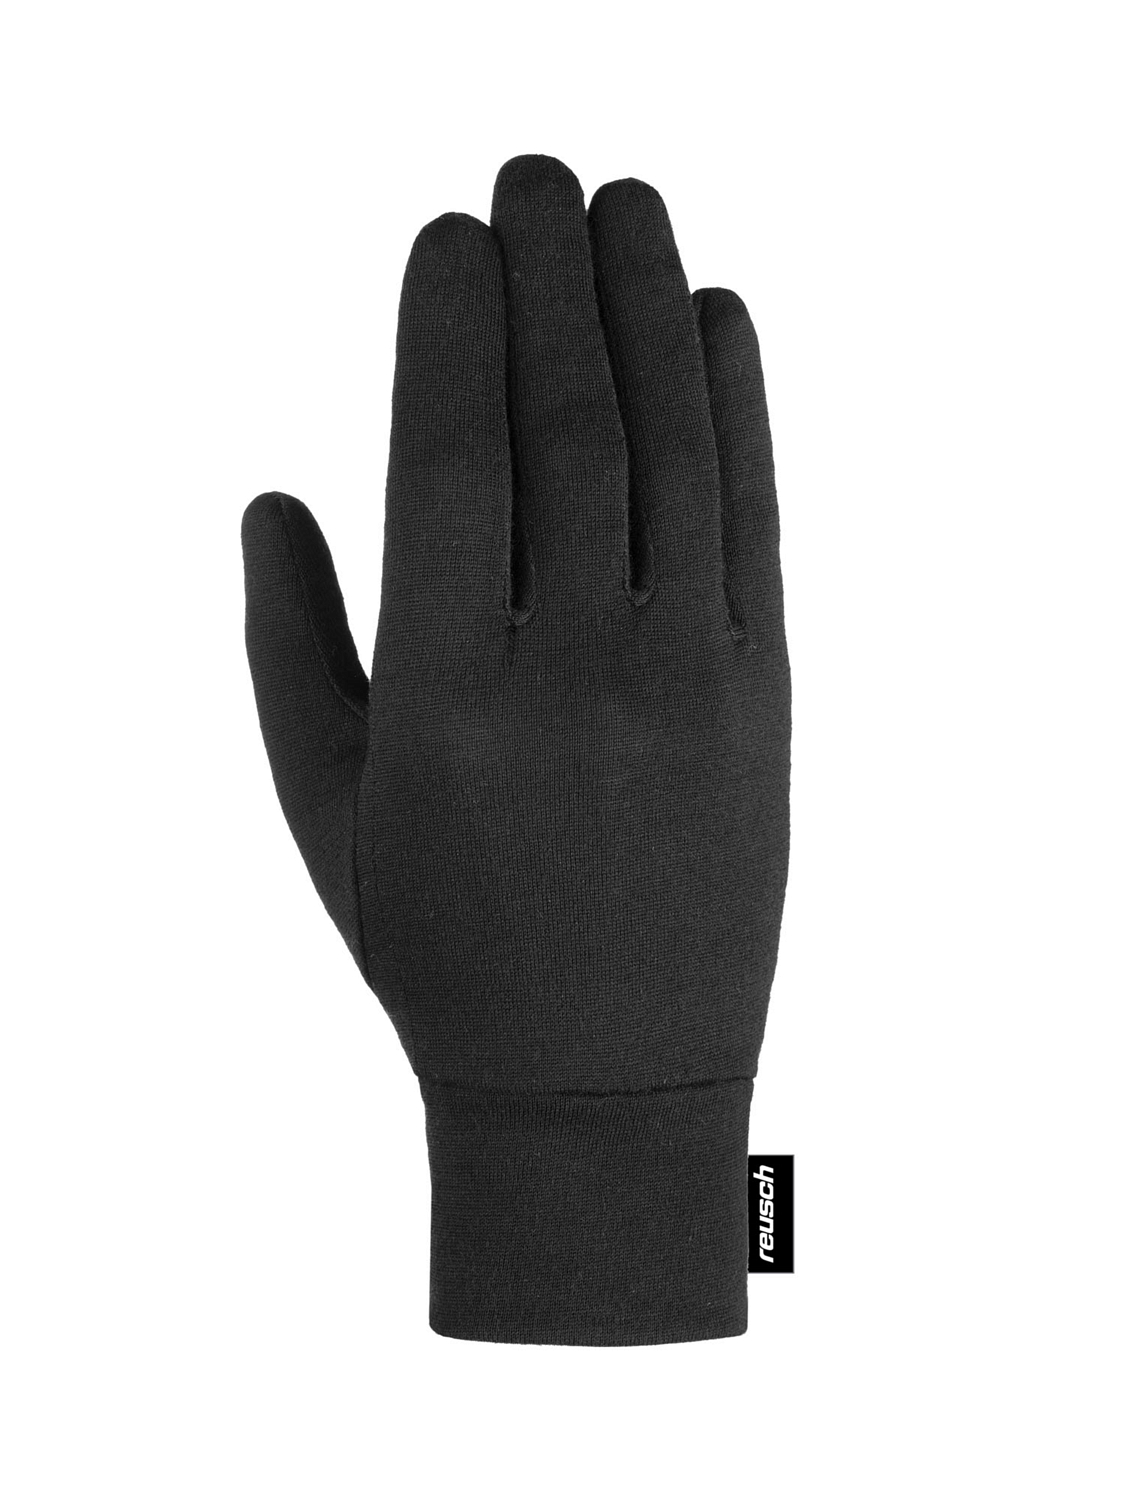 Перчатки Reusch Merino Wool Conductive Black (Inch (Дюйм):6,5)